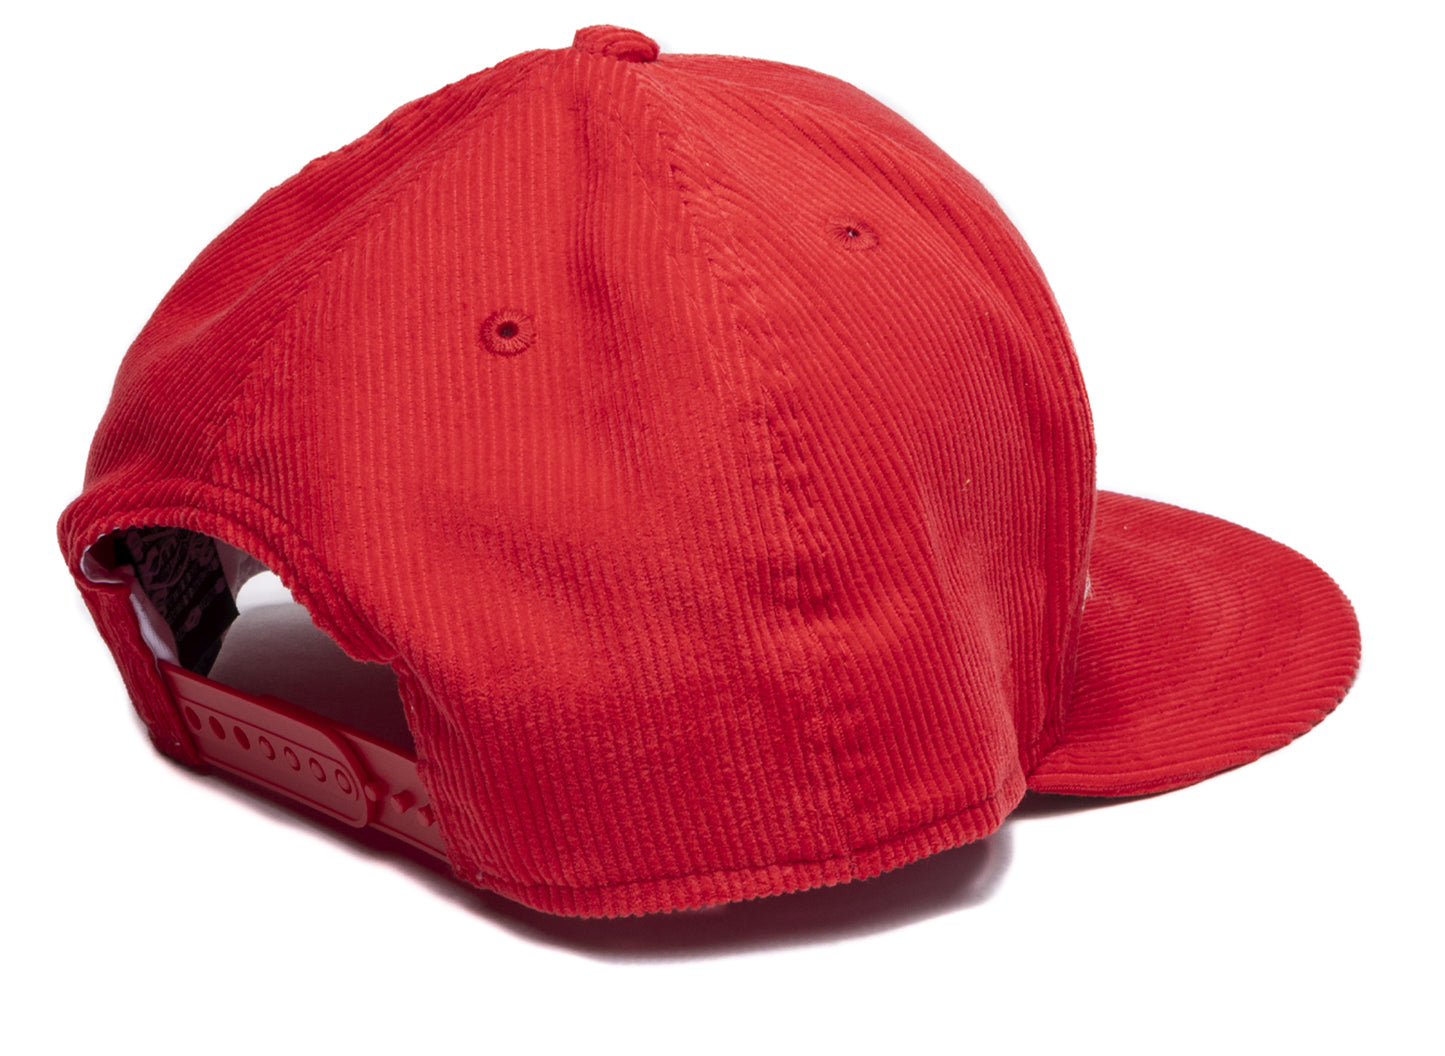 New Era Vintage NCAA Ohio Buckeyes Snapback Hat xld